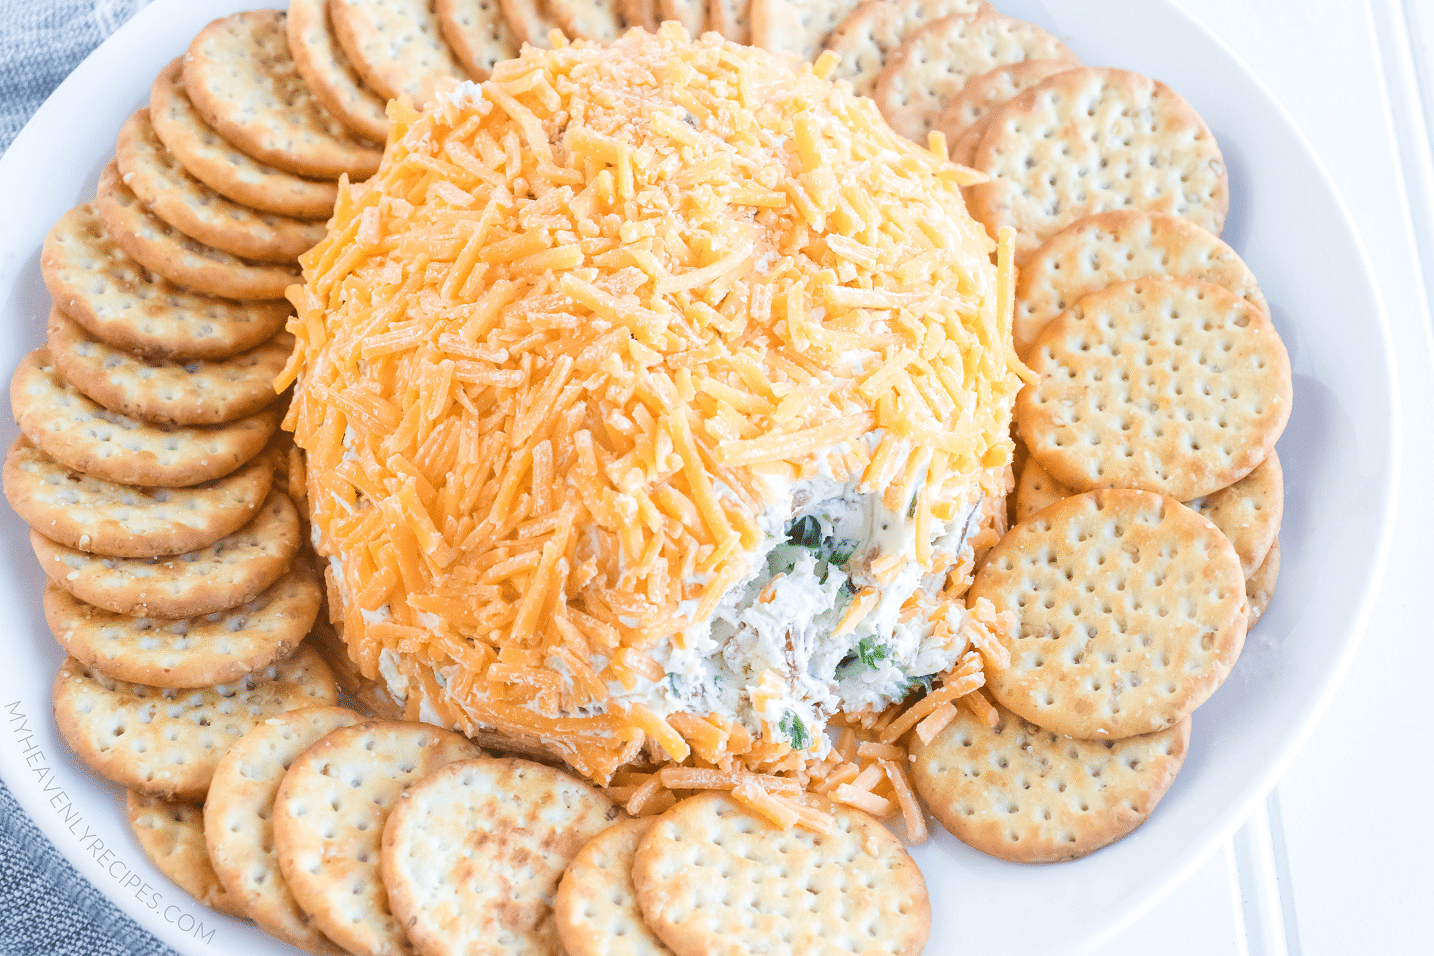 platter of cheeseball and crackers